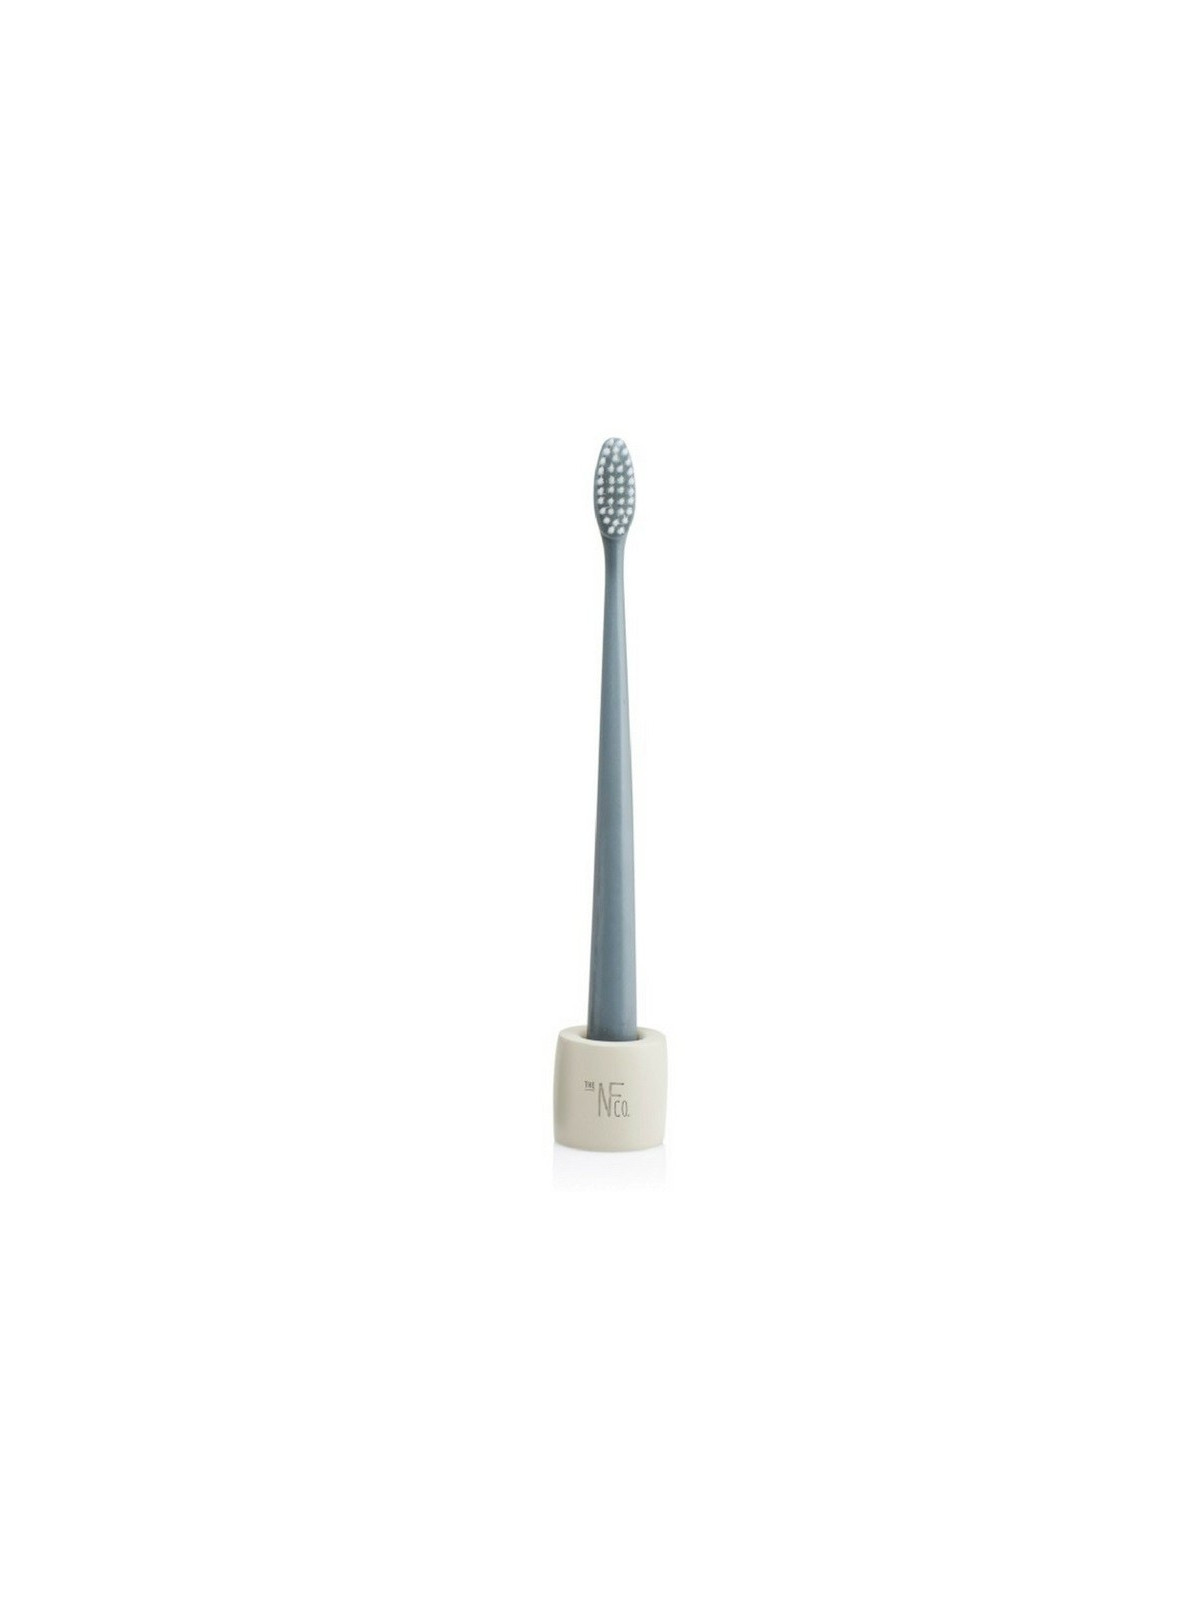 Dantų šepetėlis su stoveliu The Natural Family Co Biodegradable Toothbrush And Resin Stand